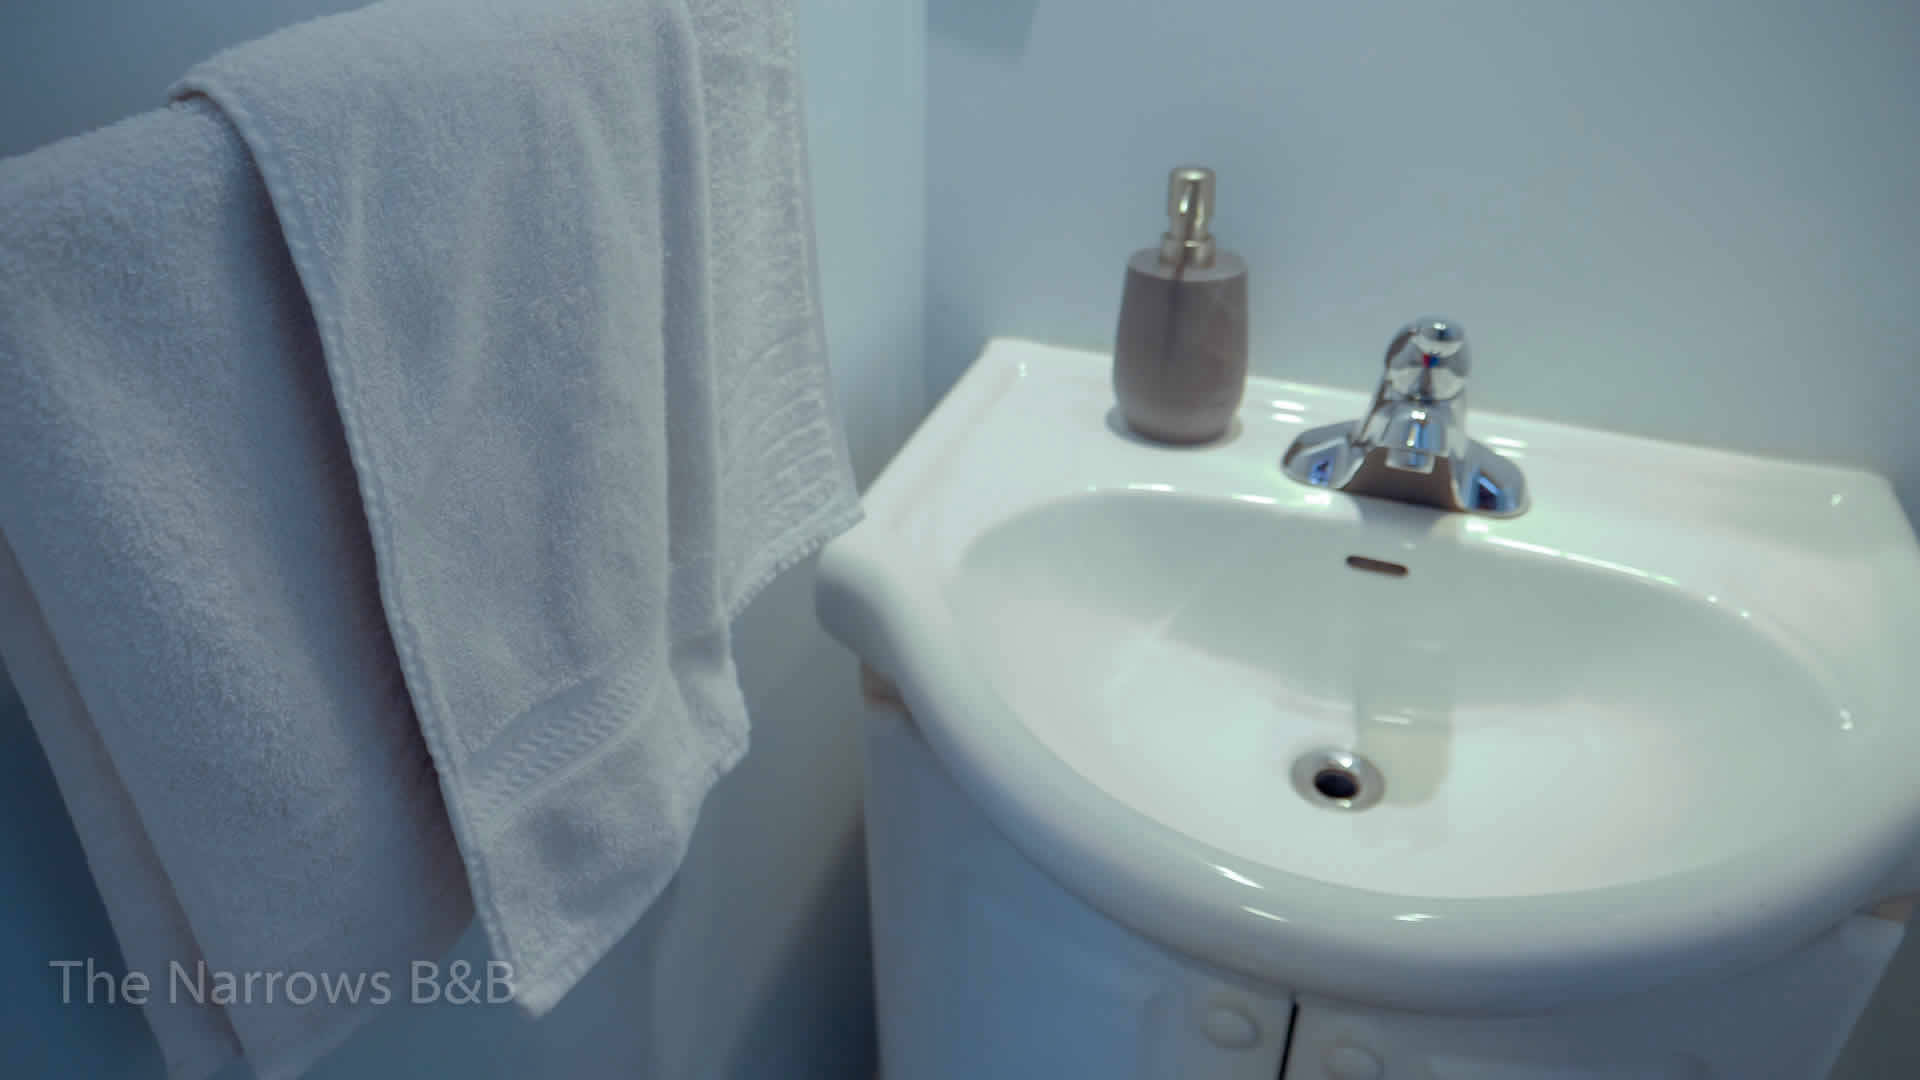 image: bathroom sink and towels on rack